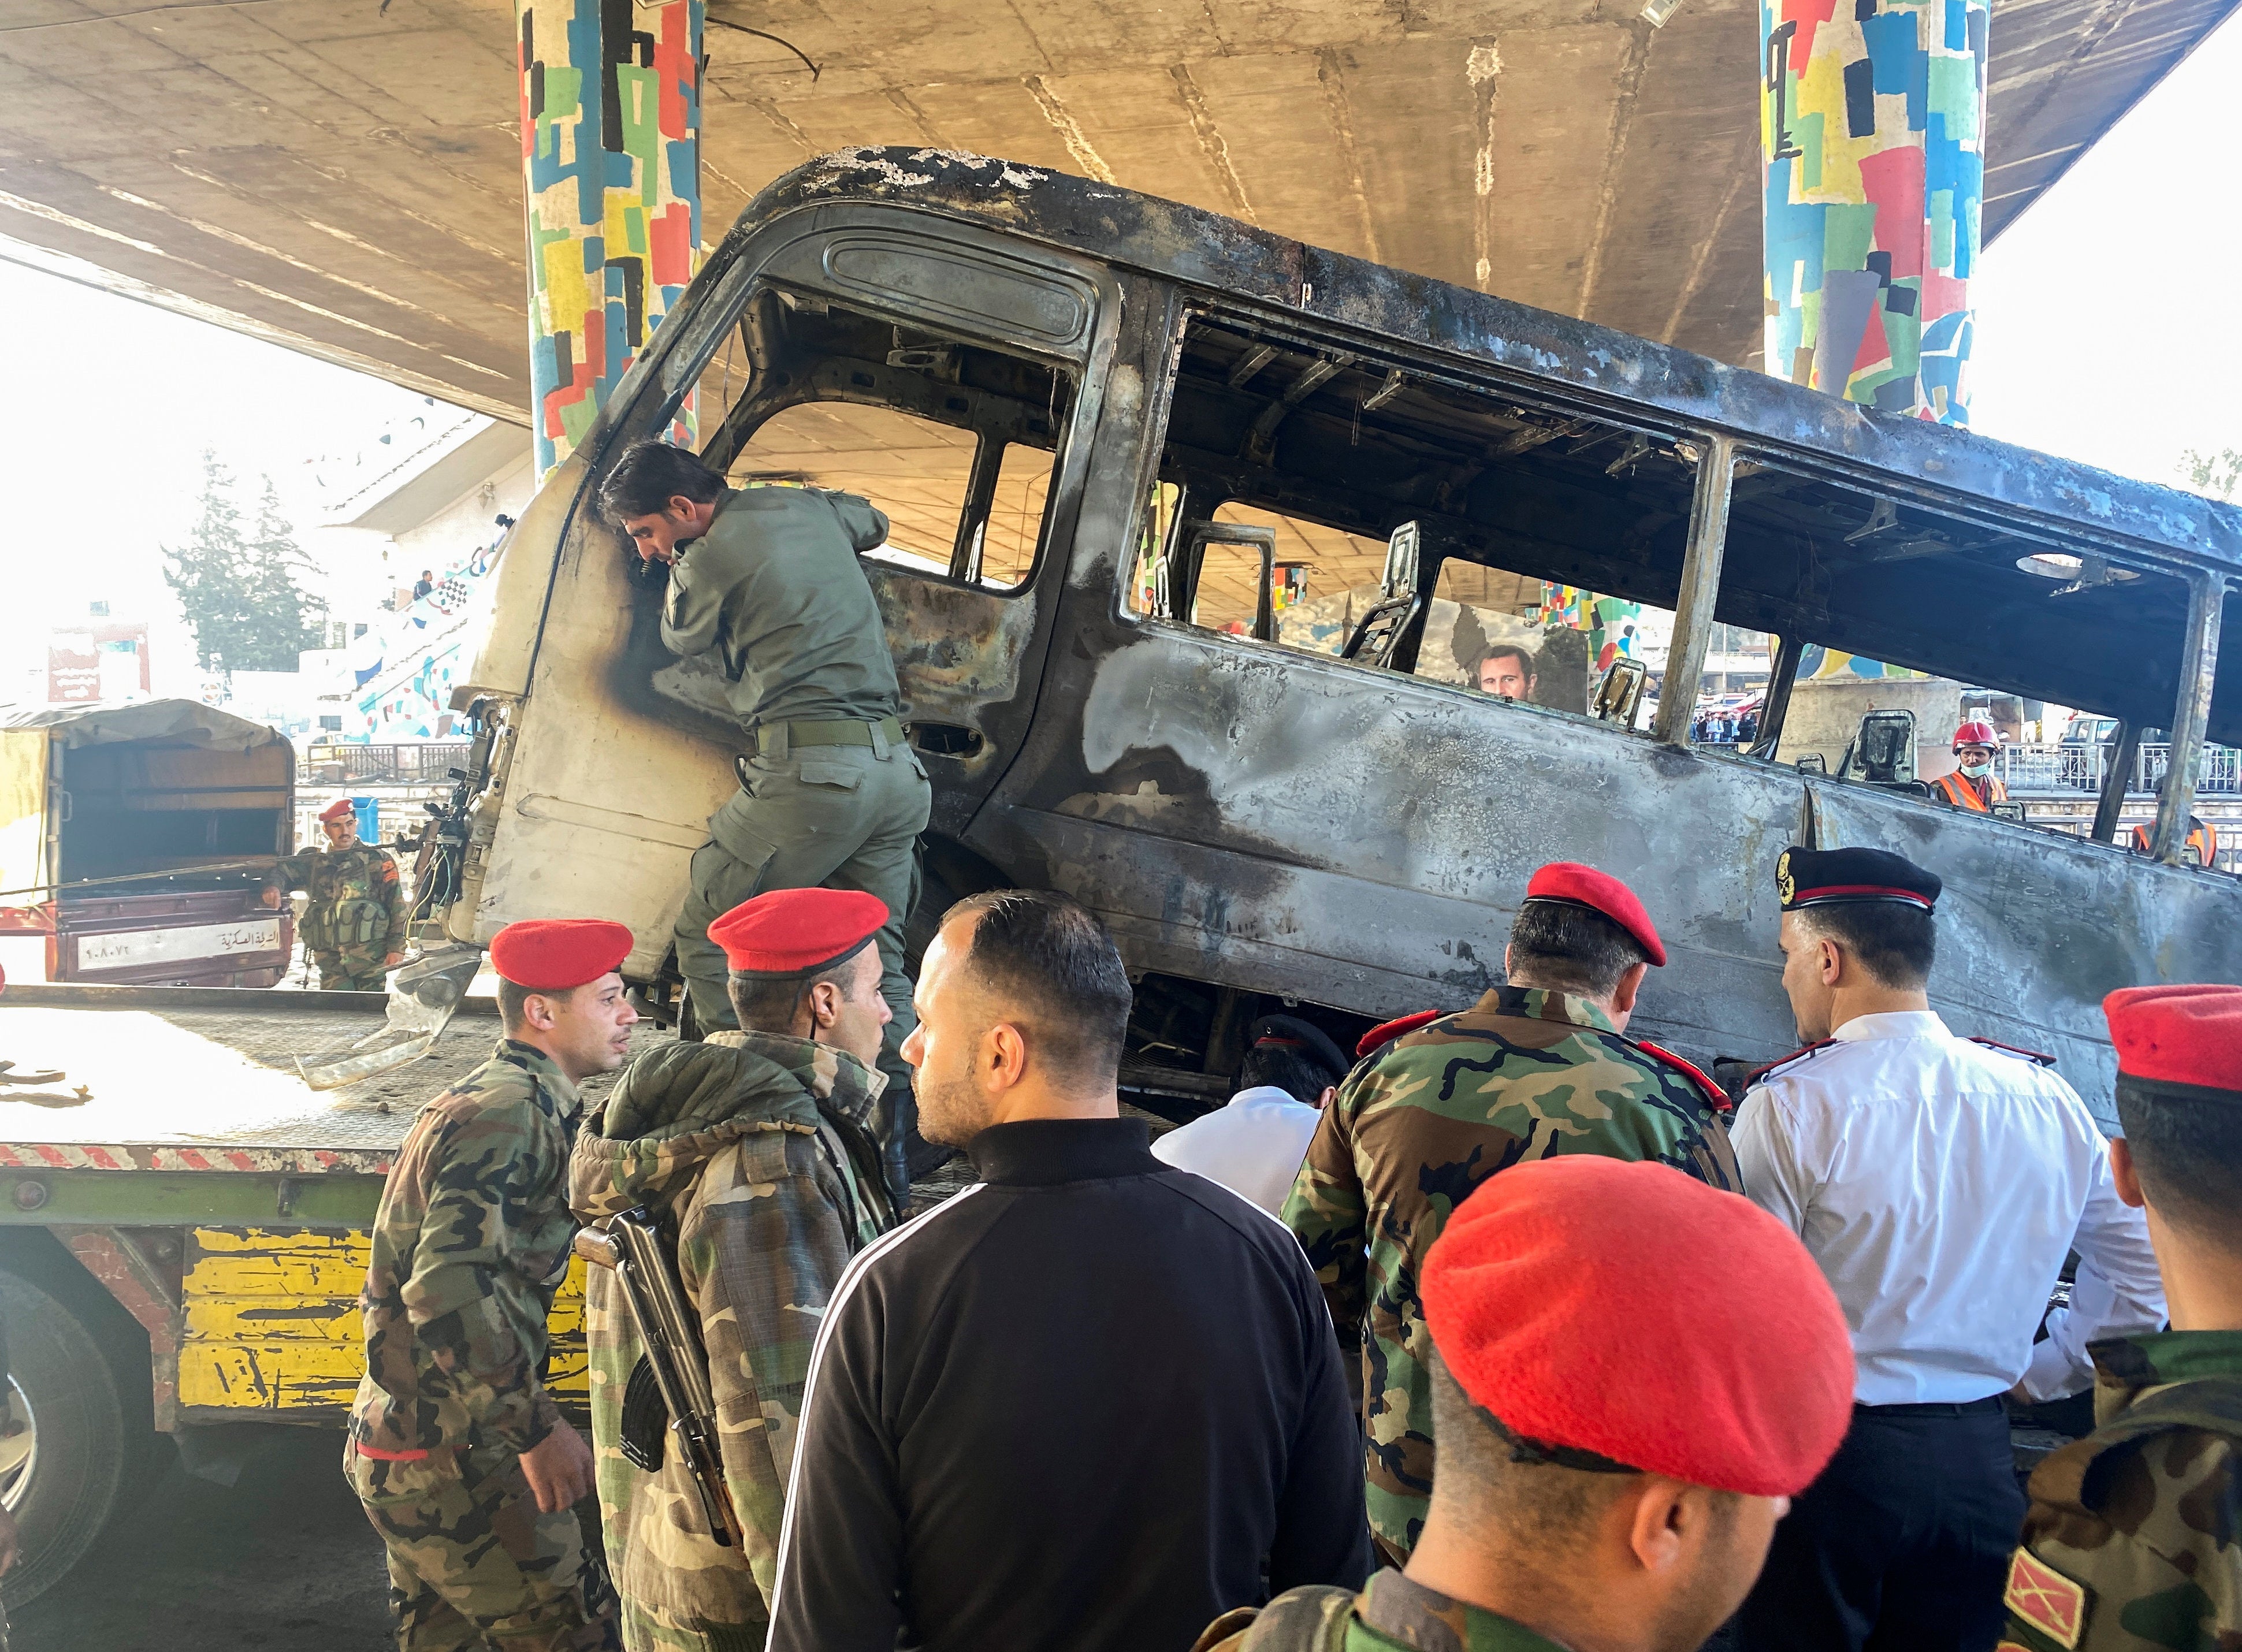 The bus was hit as it drove under Jisr al-Rais bridge